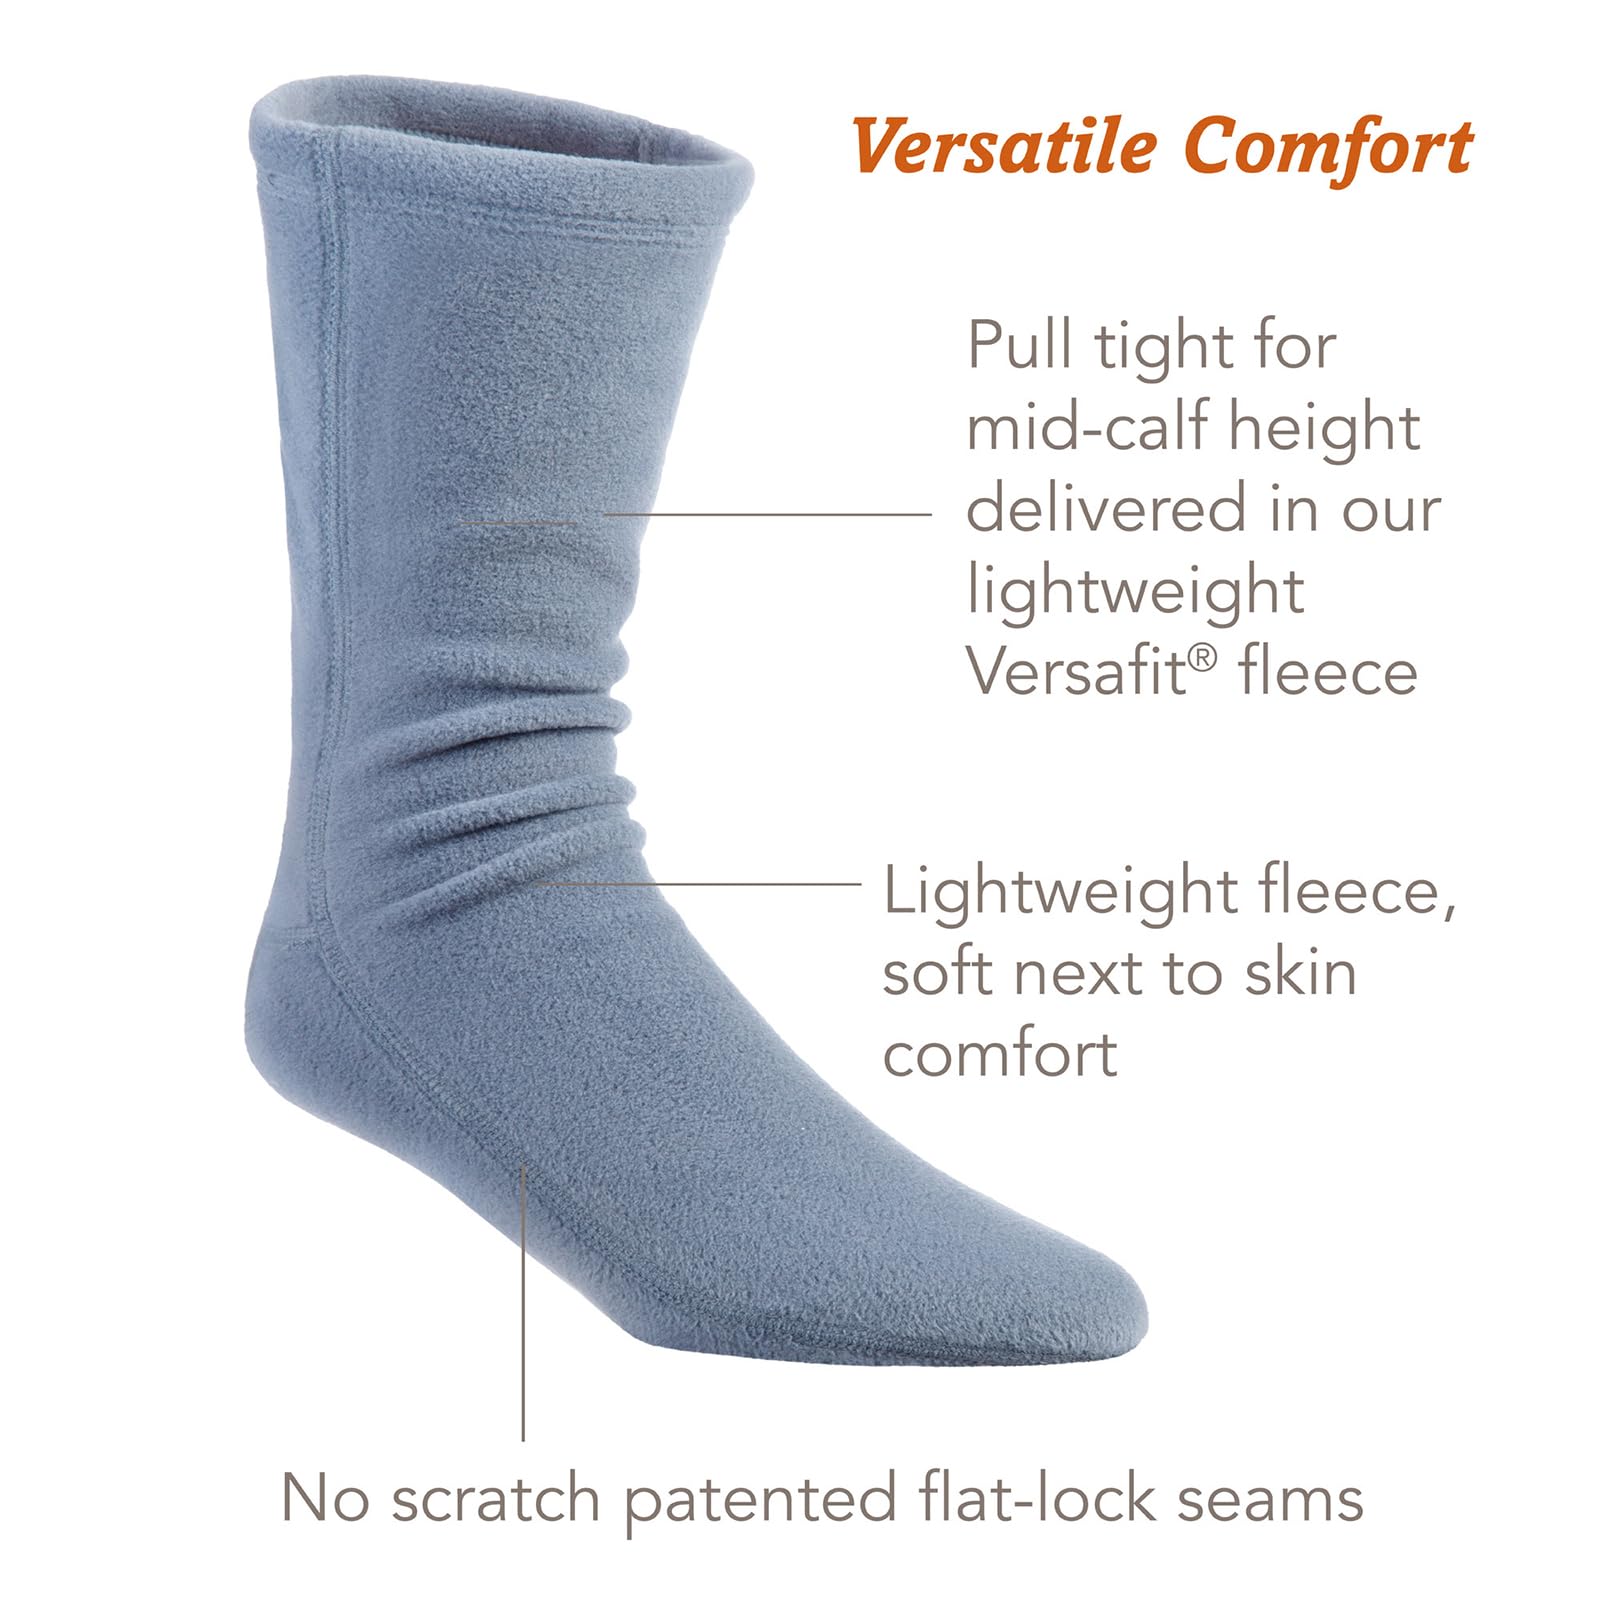 Acorn Unisex Versafit Fleece Sock, Warm, Breathable and Moisture Wicking, Mid-Calf Length